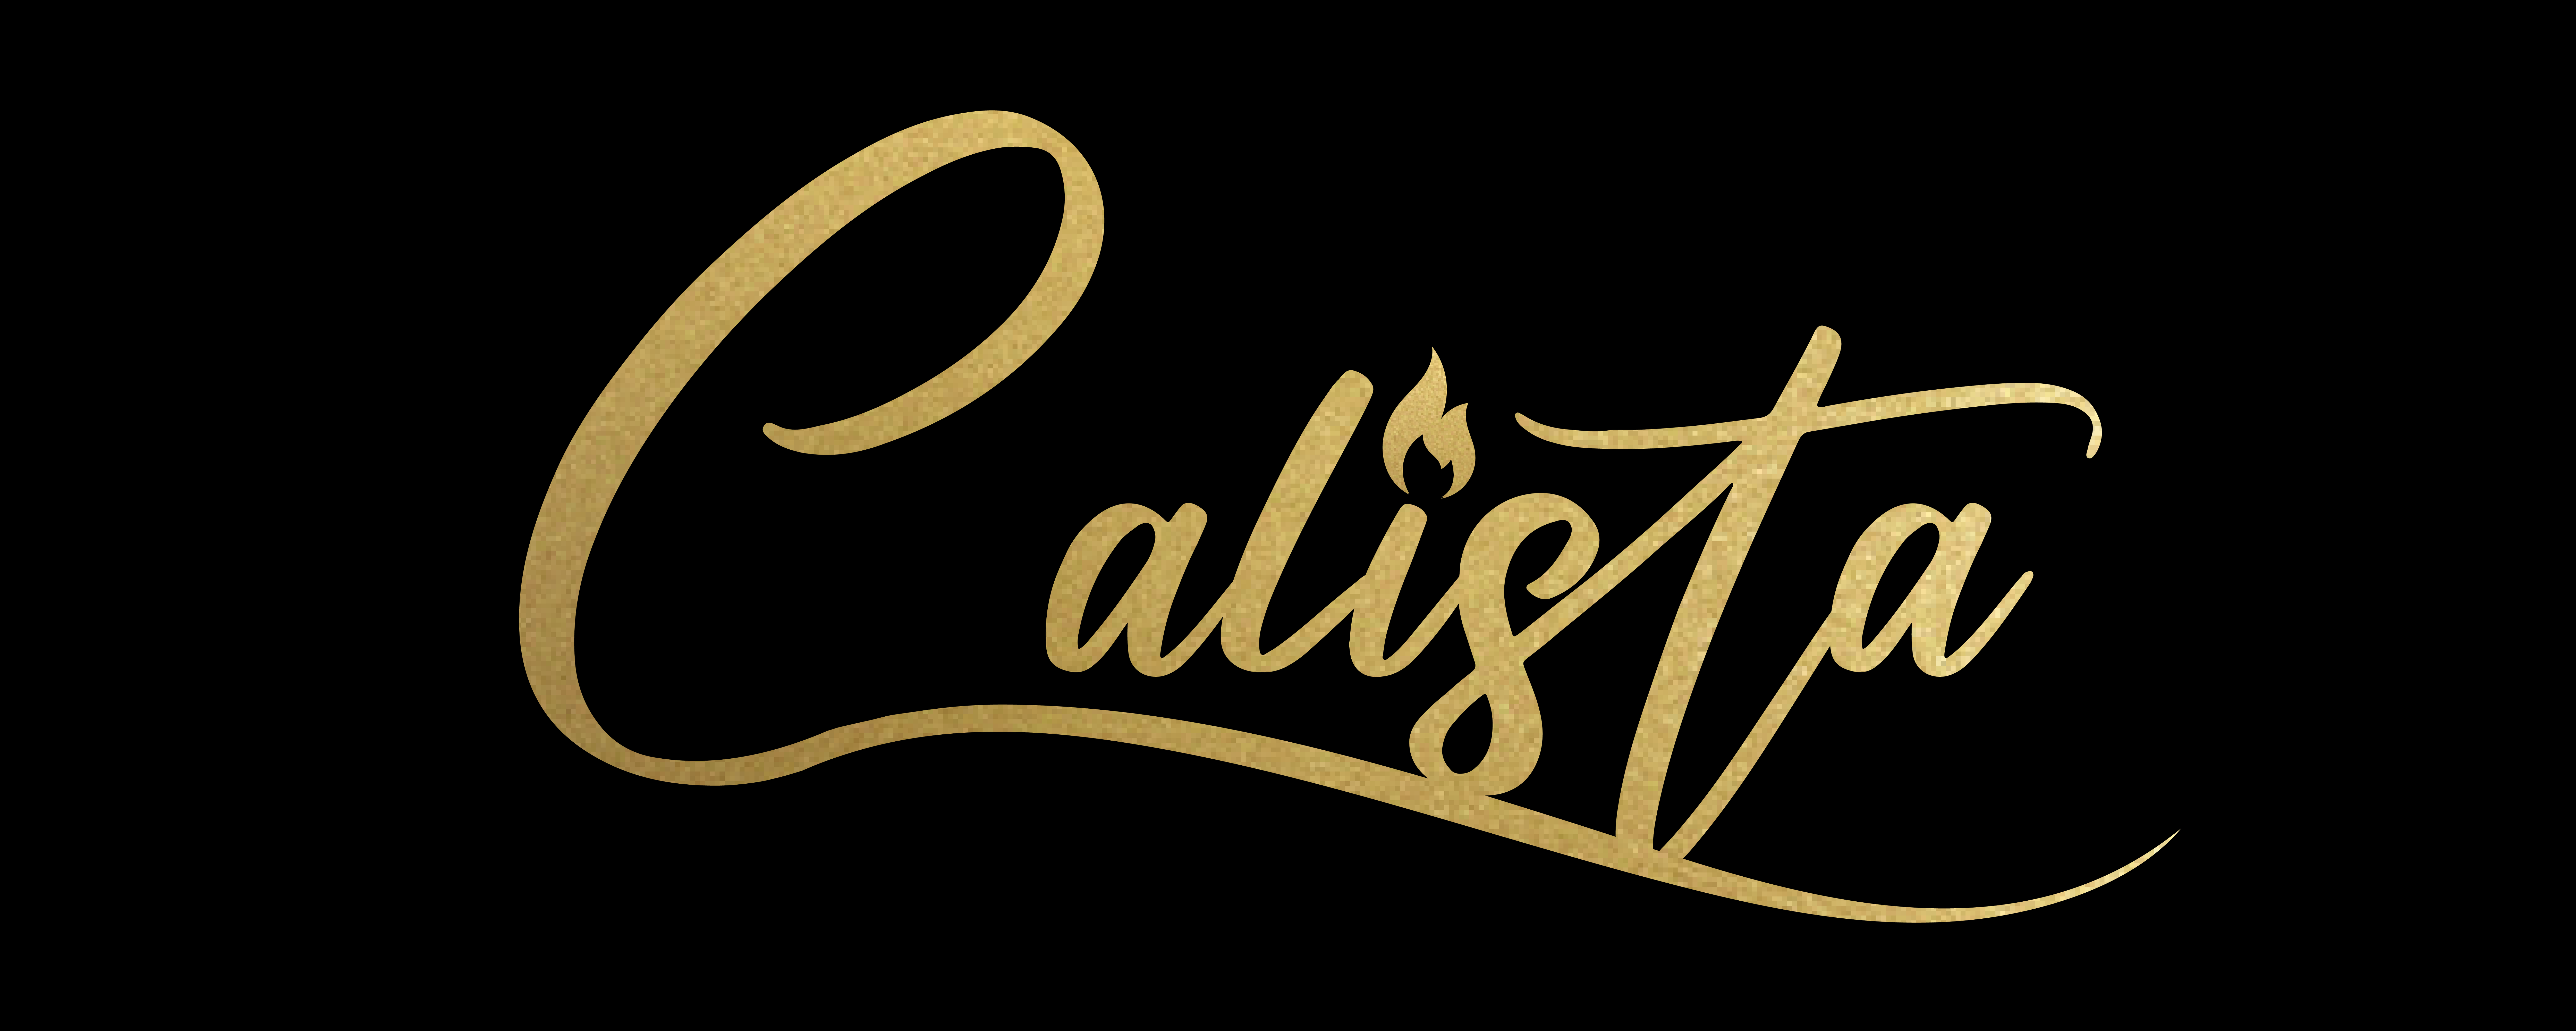 Logo Calista HD